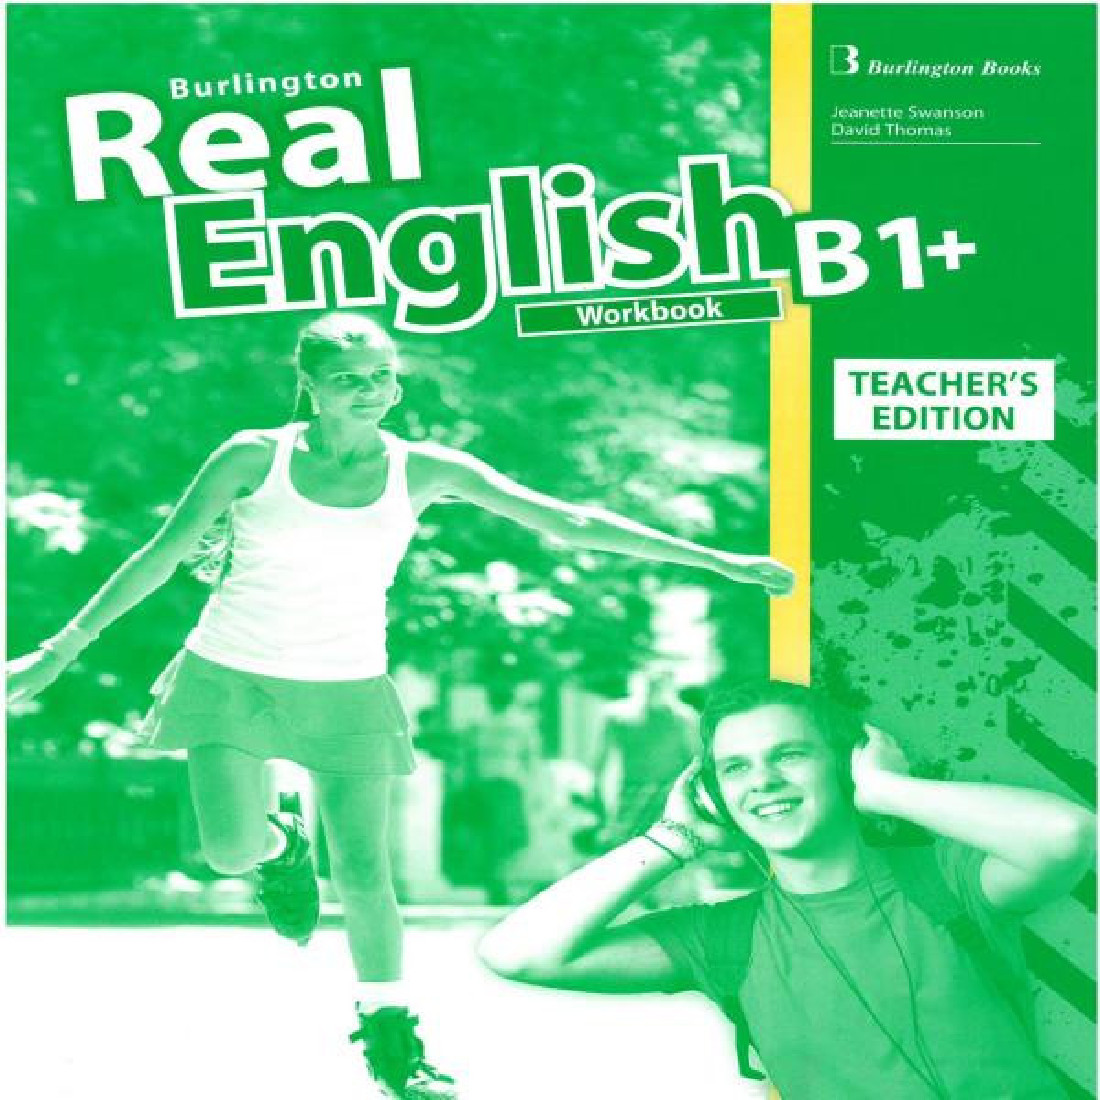 REAL ENGLISH B1+ TEACHERS WORKBOOK